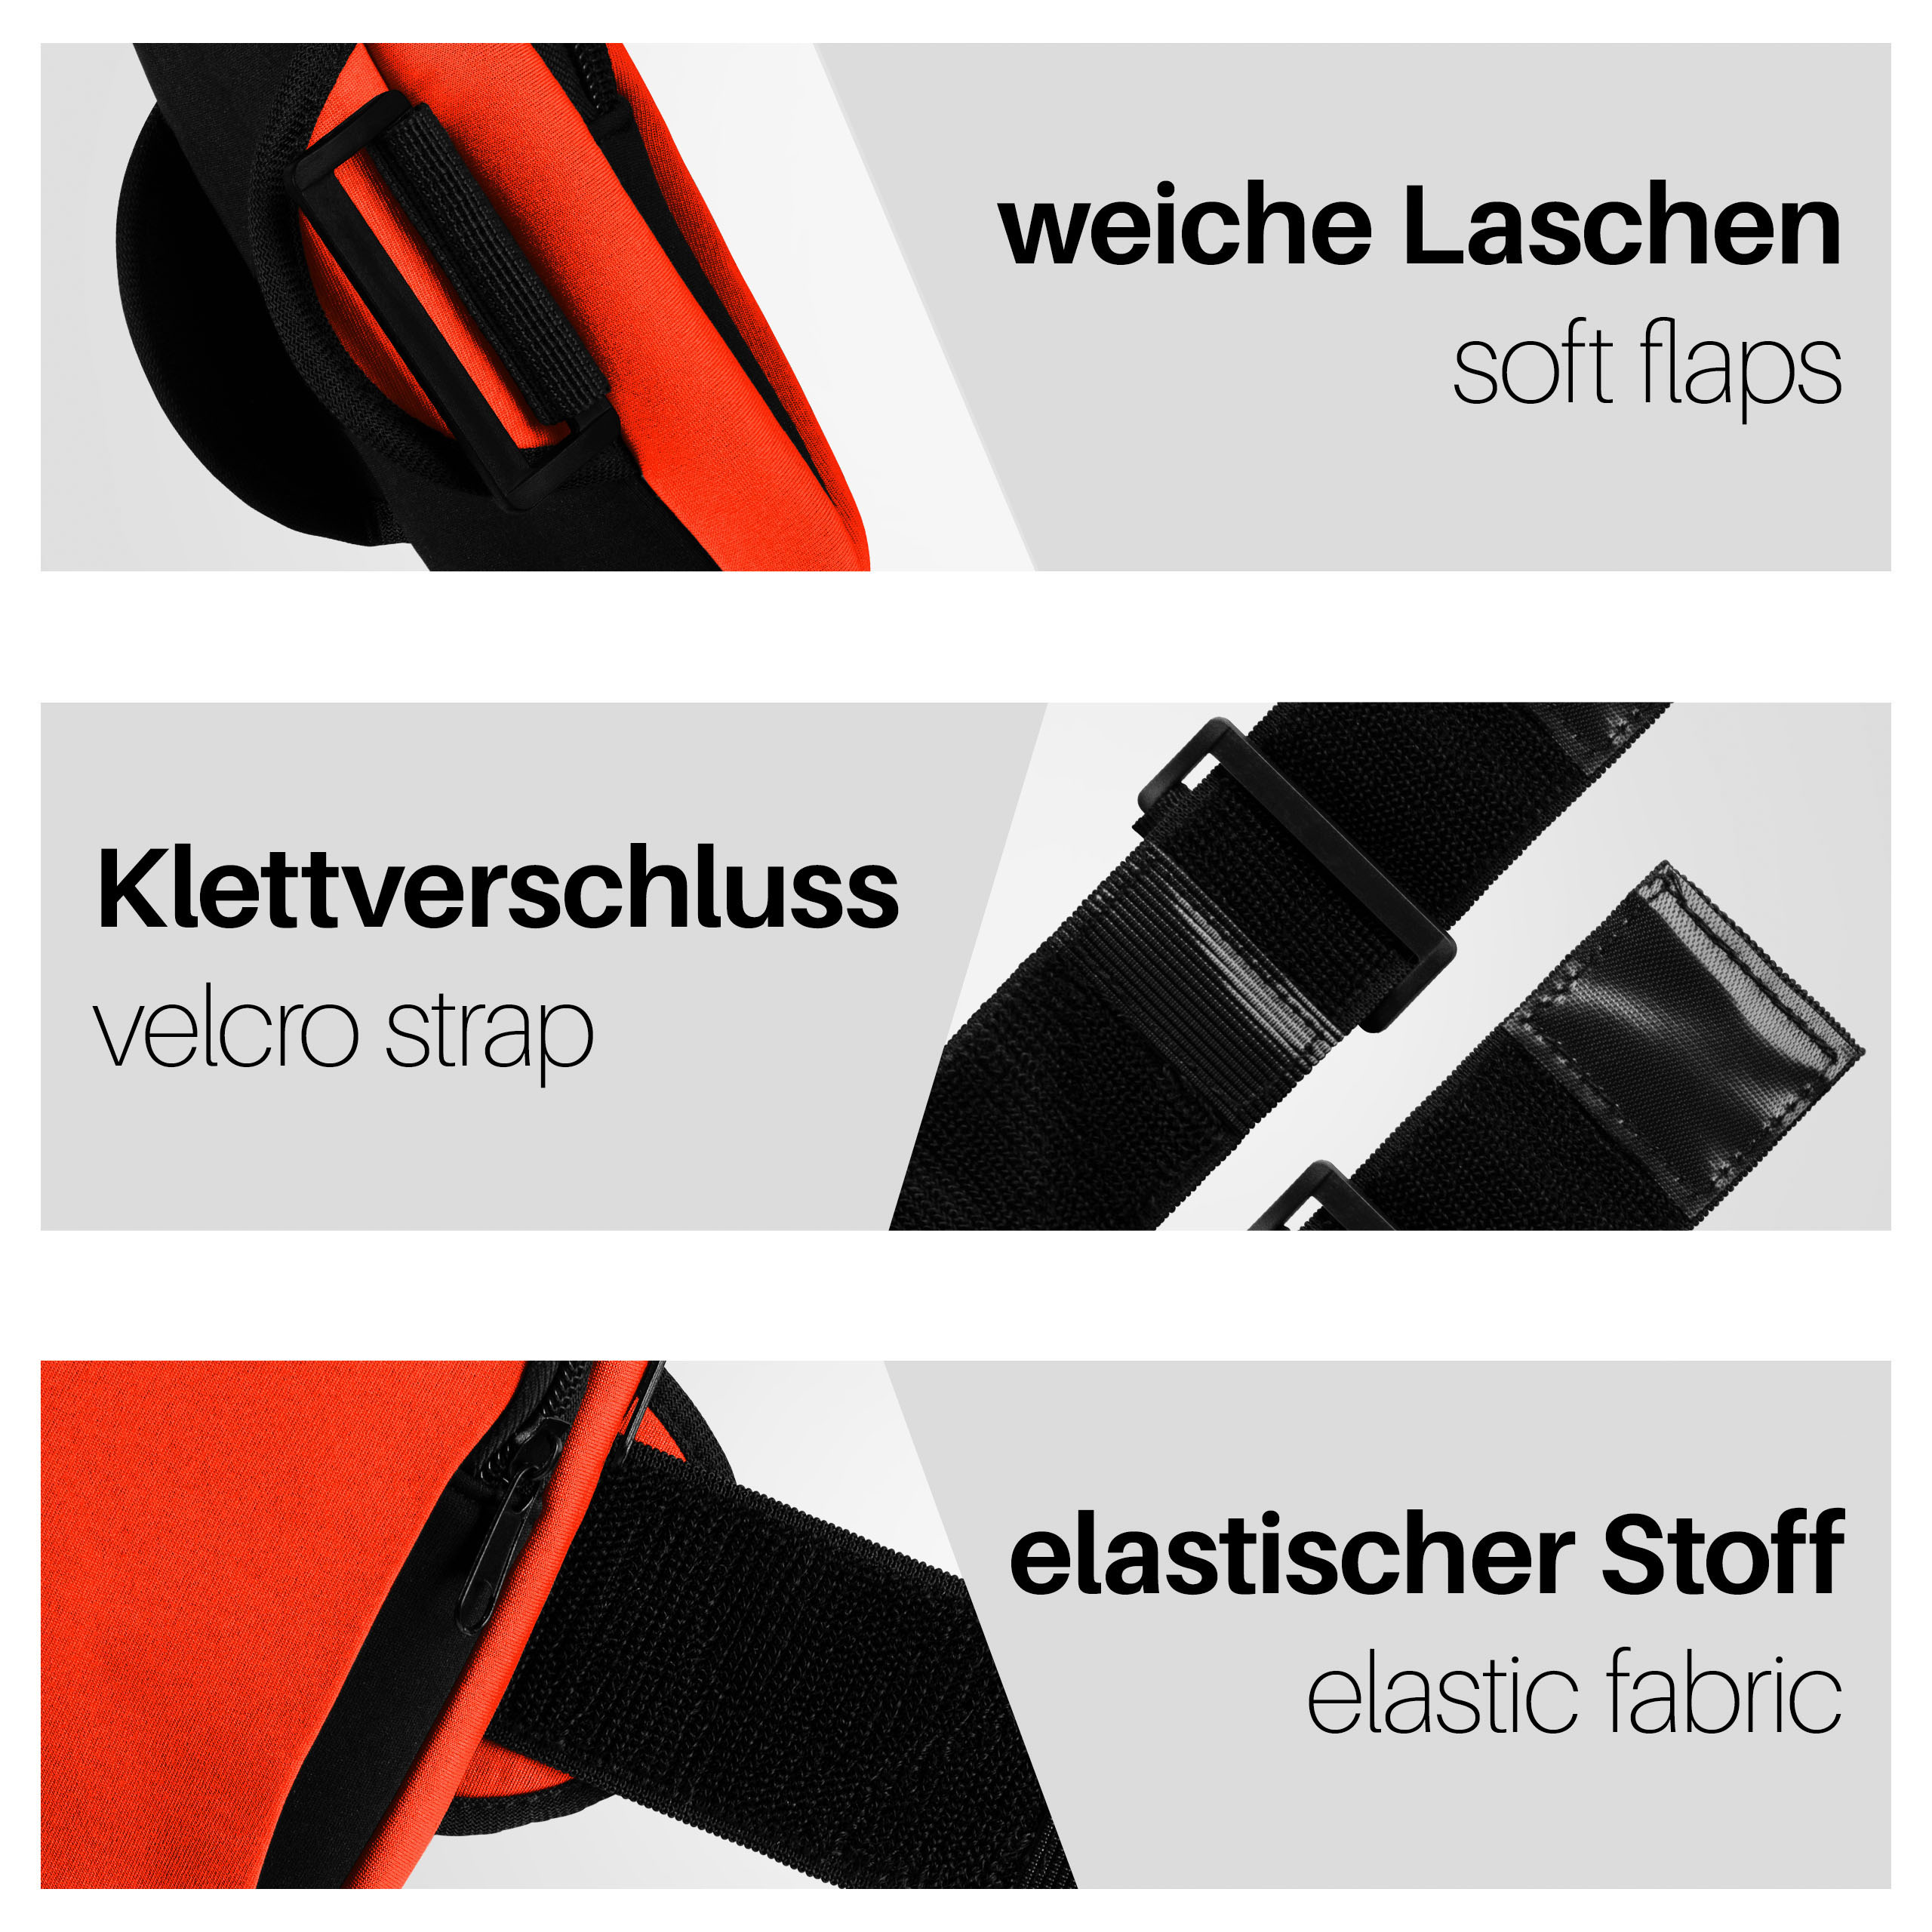 MOEX Sport Armband, Zenfone 5z, Asus Cover, Full ASUS, Orange